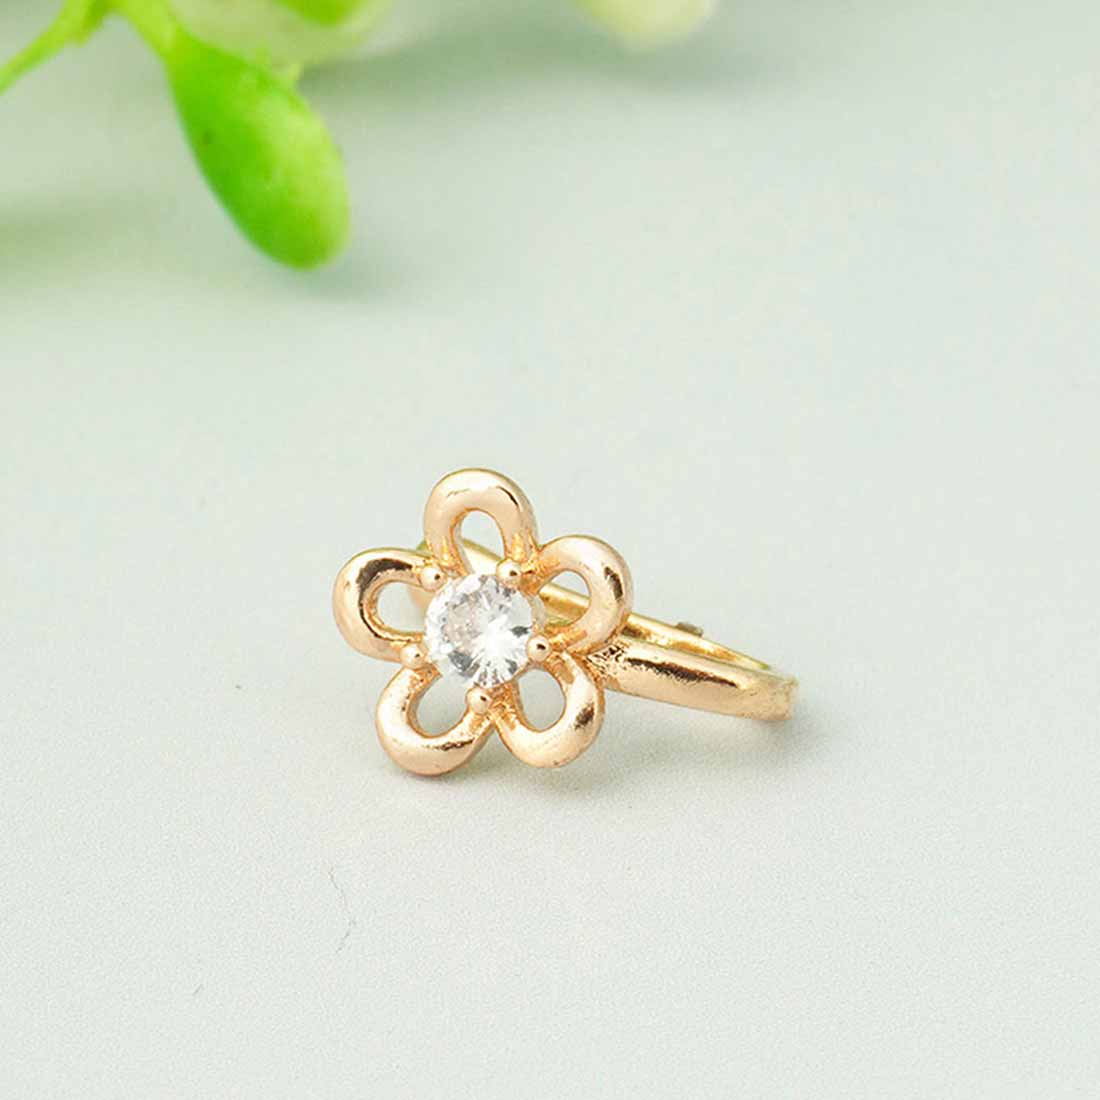 Gold-Toned & White Rhinestone-Studded Flower Nose Ring